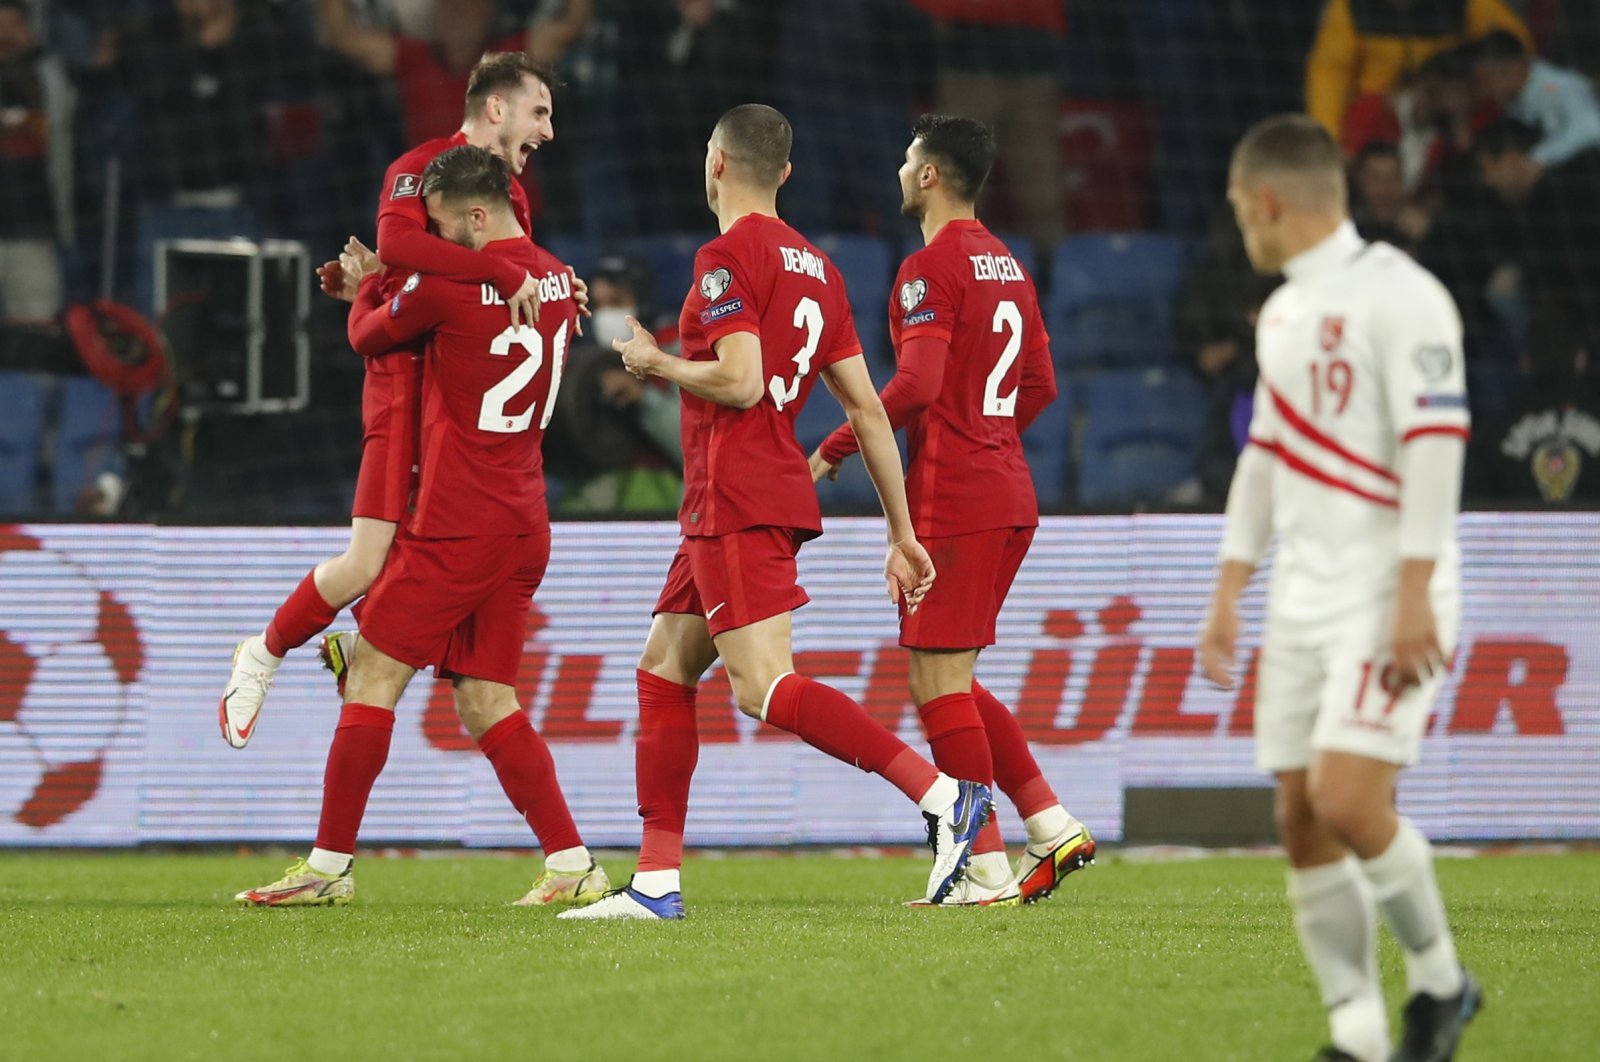 Turkey's Halil Dervişoğlu celebrates scoring a goal in the match against Gibraltar during World Cup Qualifiers, Istanbul, Turkey, Nov. 13, 2021. (Reuters Photo)